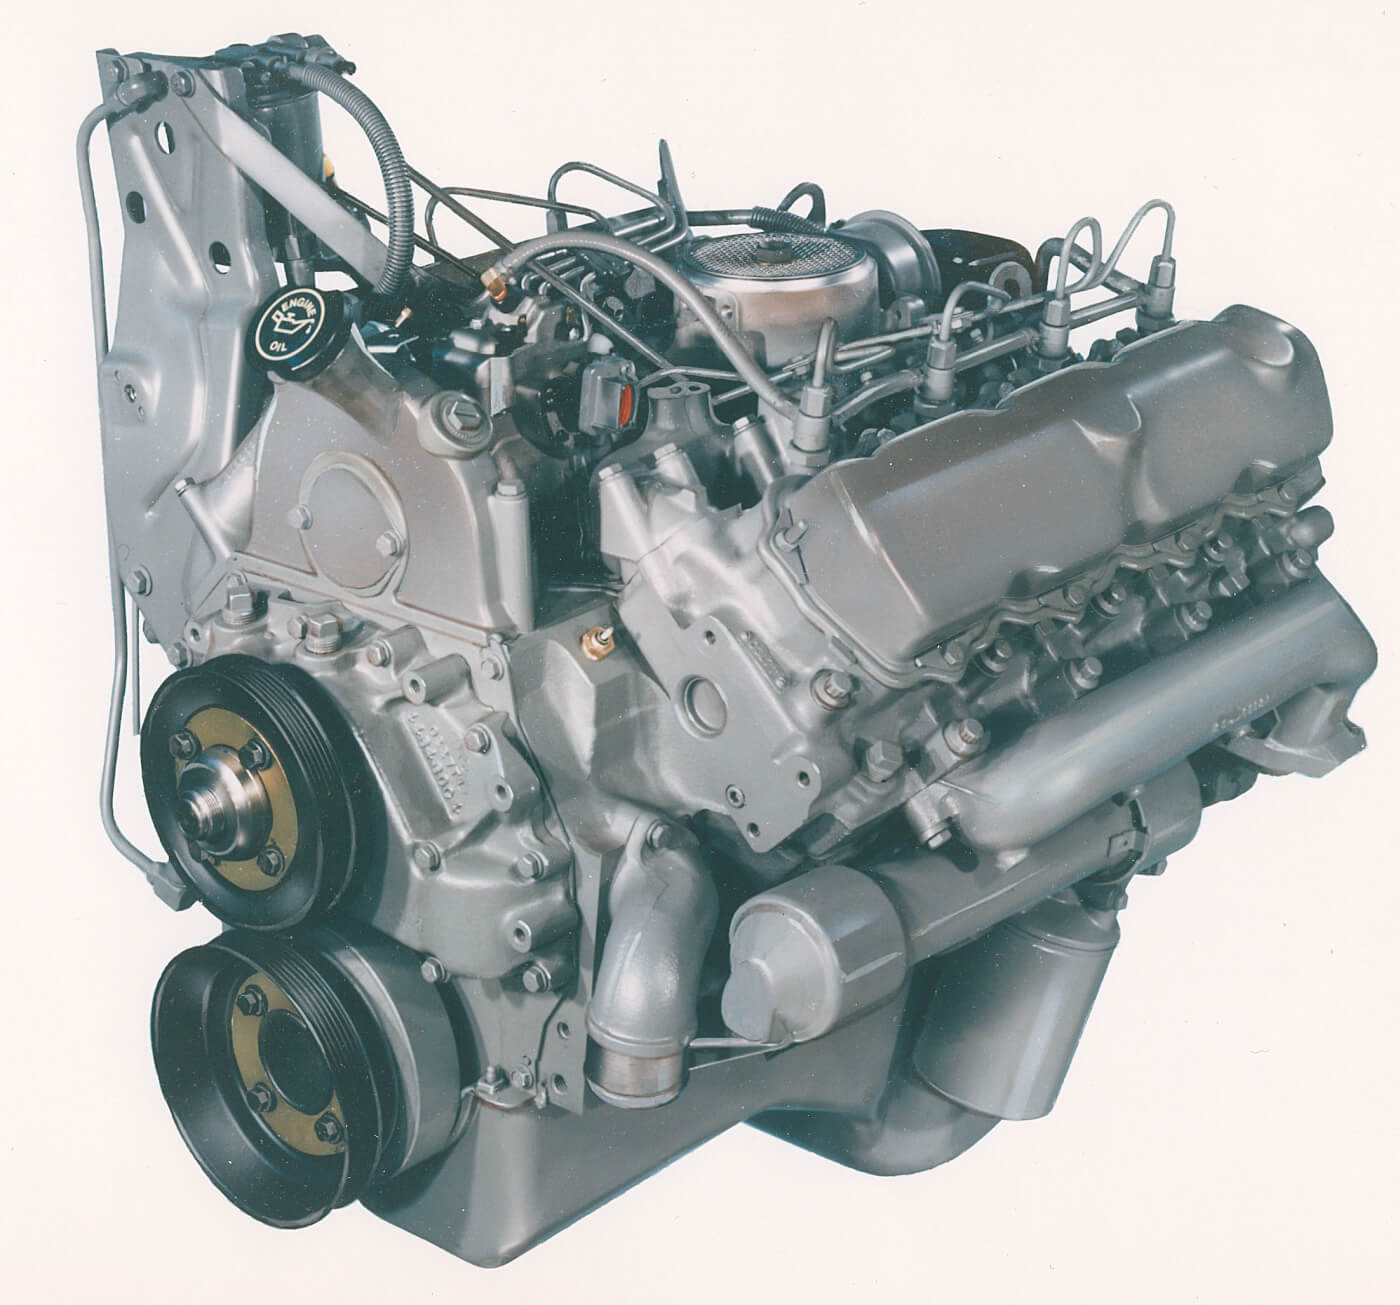 Дизельные моторы форд. Ford 7.3 Diesel. Двигатель Форд 7.3 дизель. 7 3 Diesel engine Powerstroke Ford. Ford engine 6.9 Diesel.